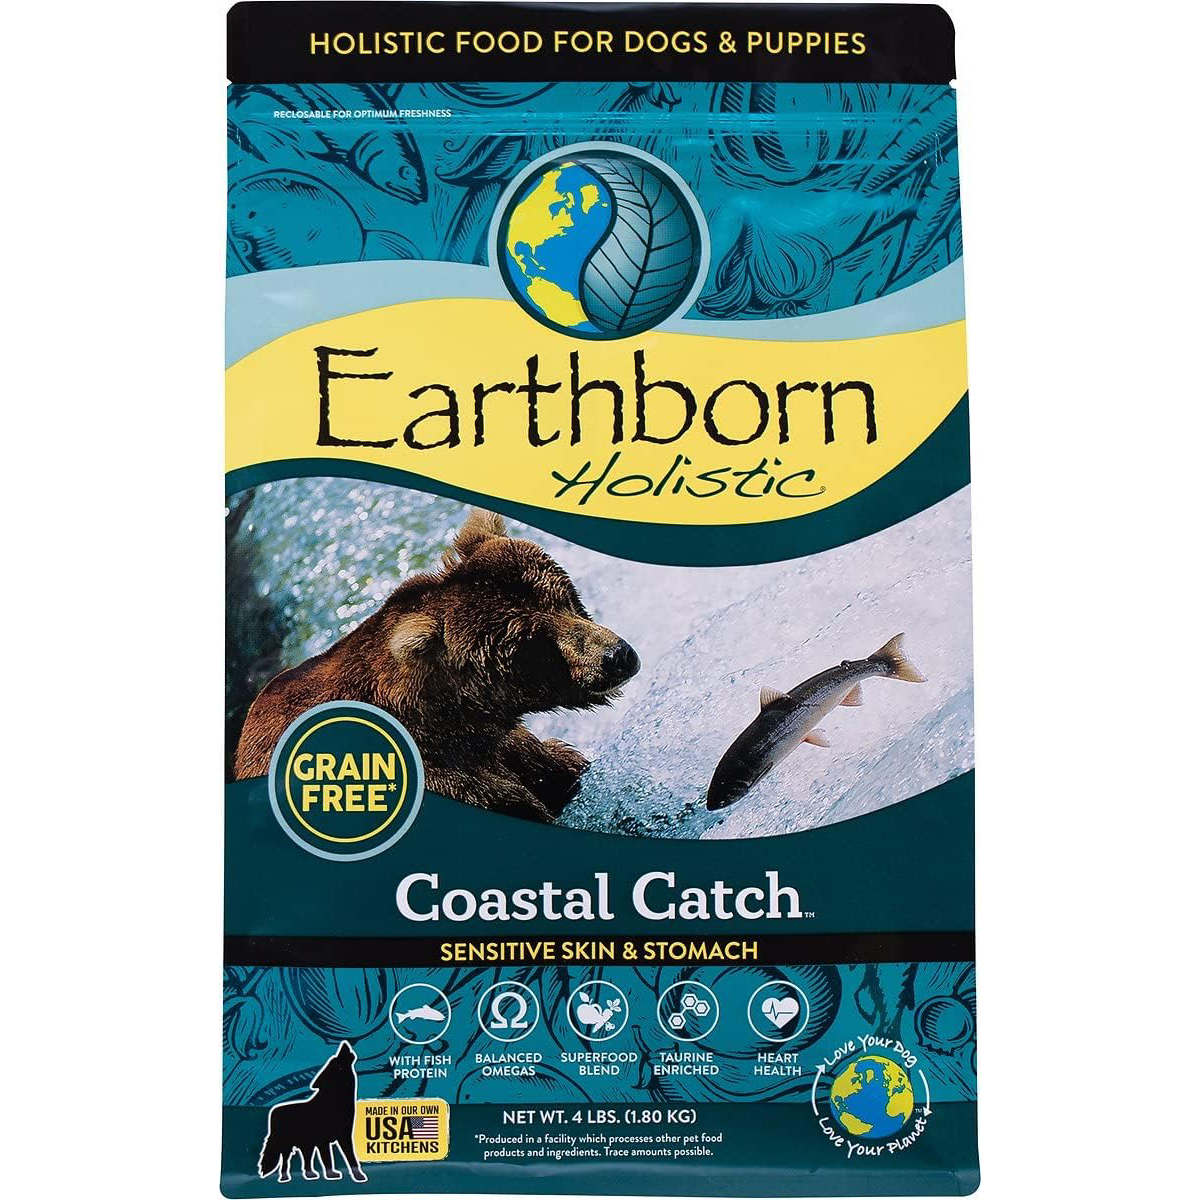 Earthborn Coastal Catch Grain-Free Natural Dog Food